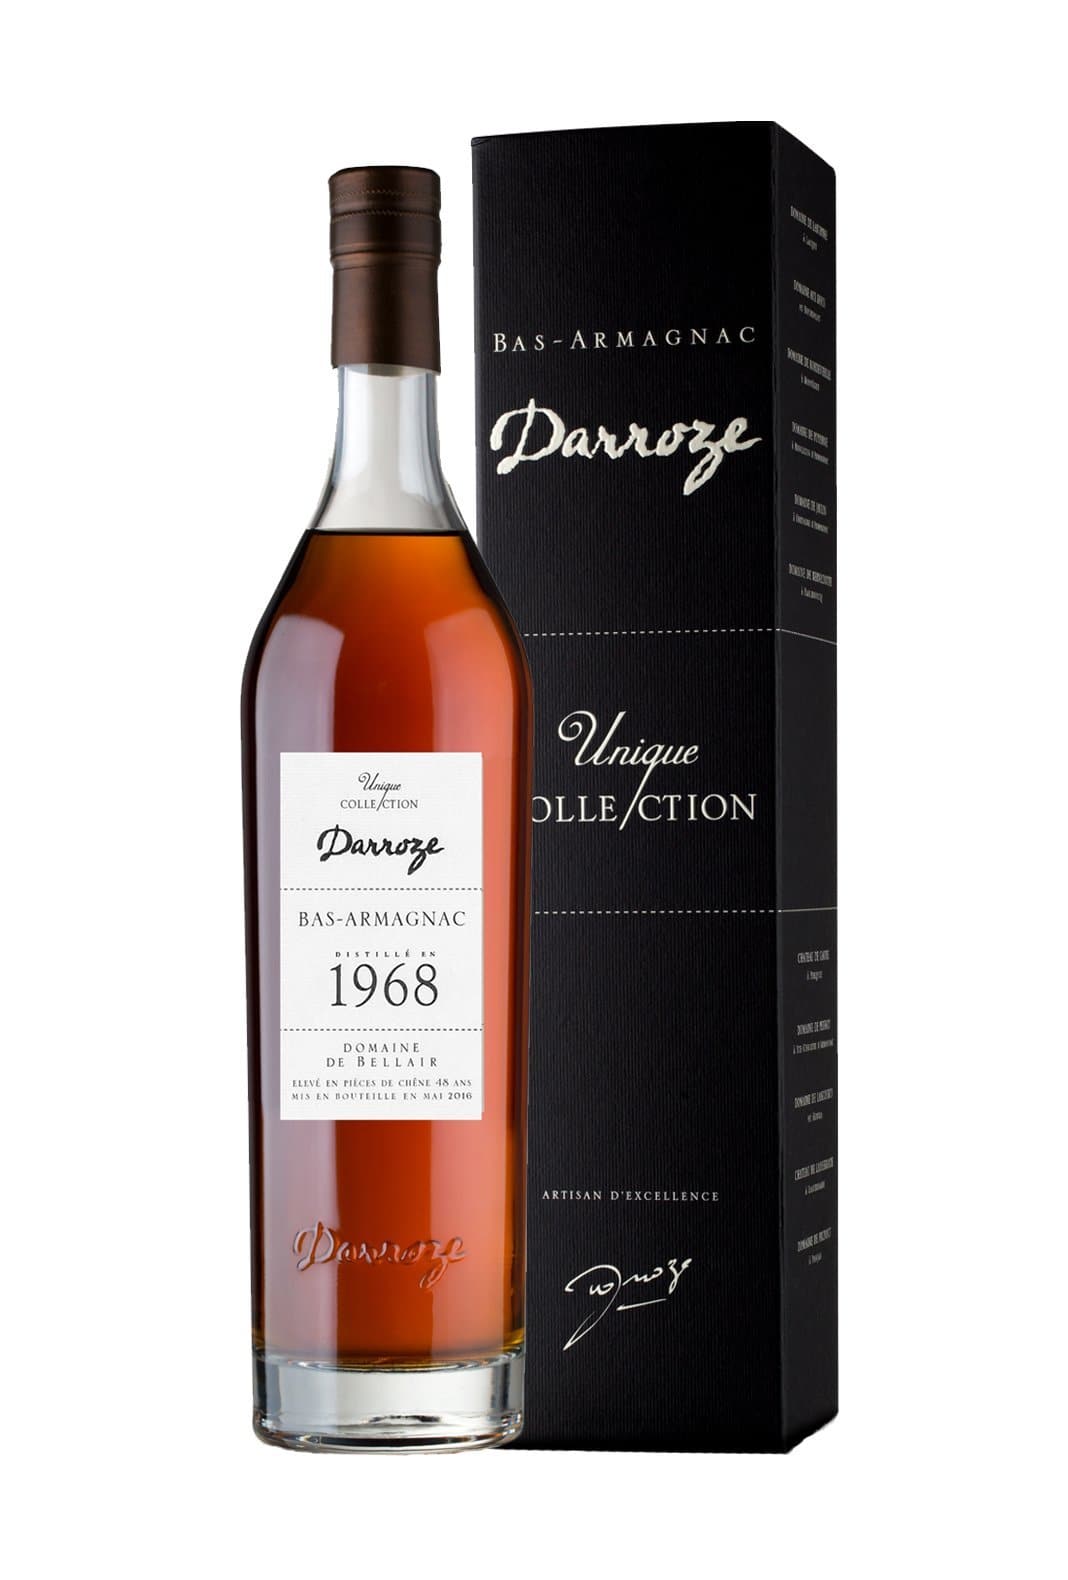 Darroze Bas Armagnac Domaine de Bellair a Cravanceres 1968 43% 700ml | Brandy | Shop online at Spirits of France